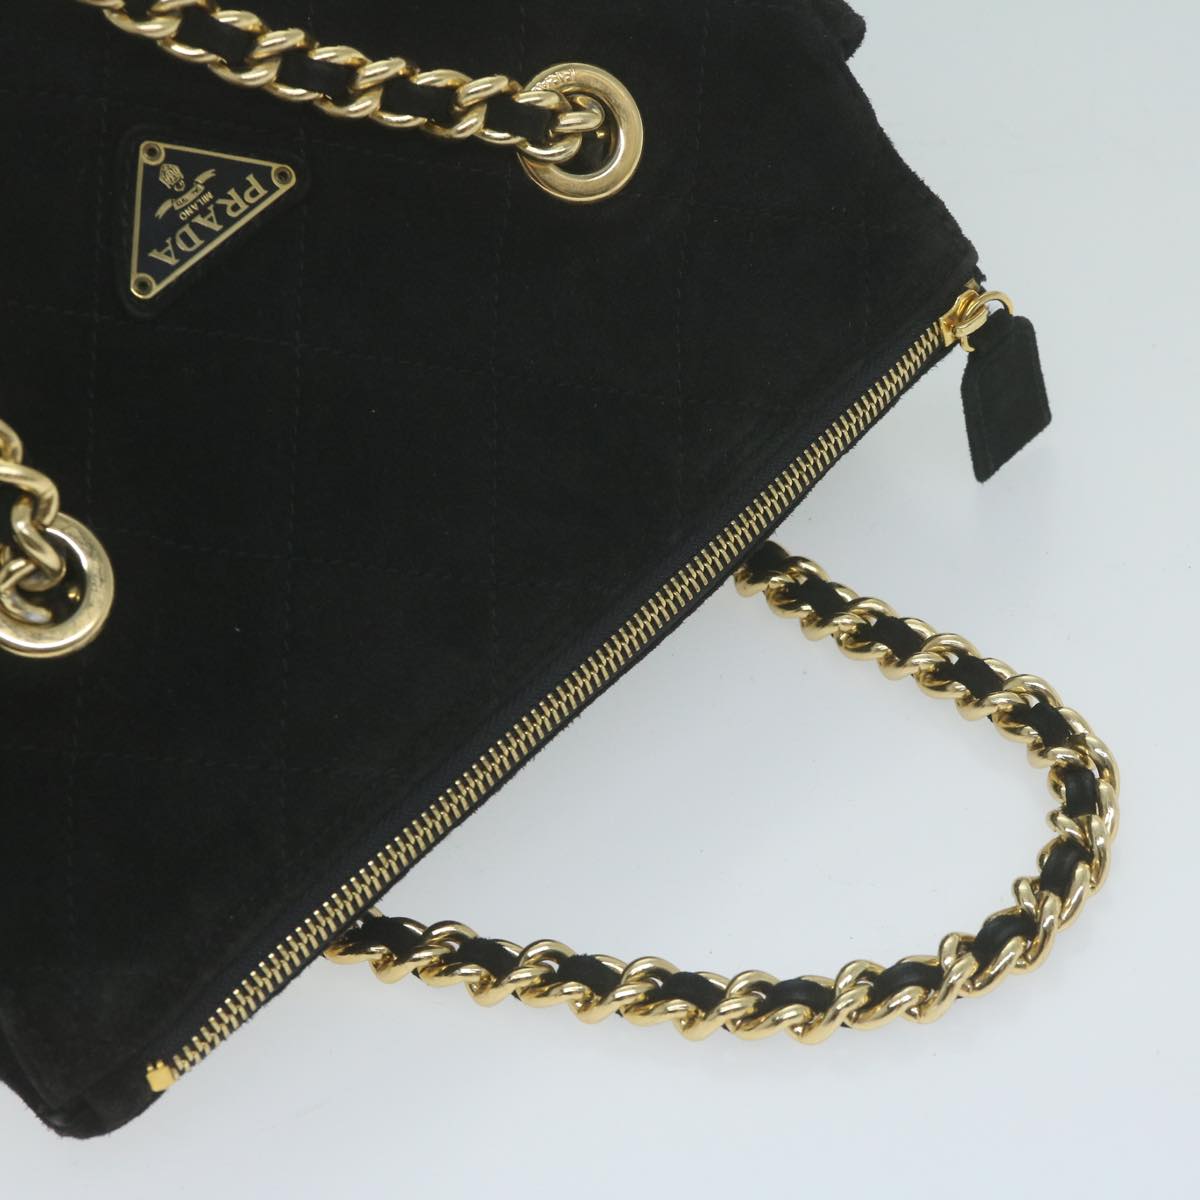 PRADA Chain Hand Bag Suede Black Auth 65891